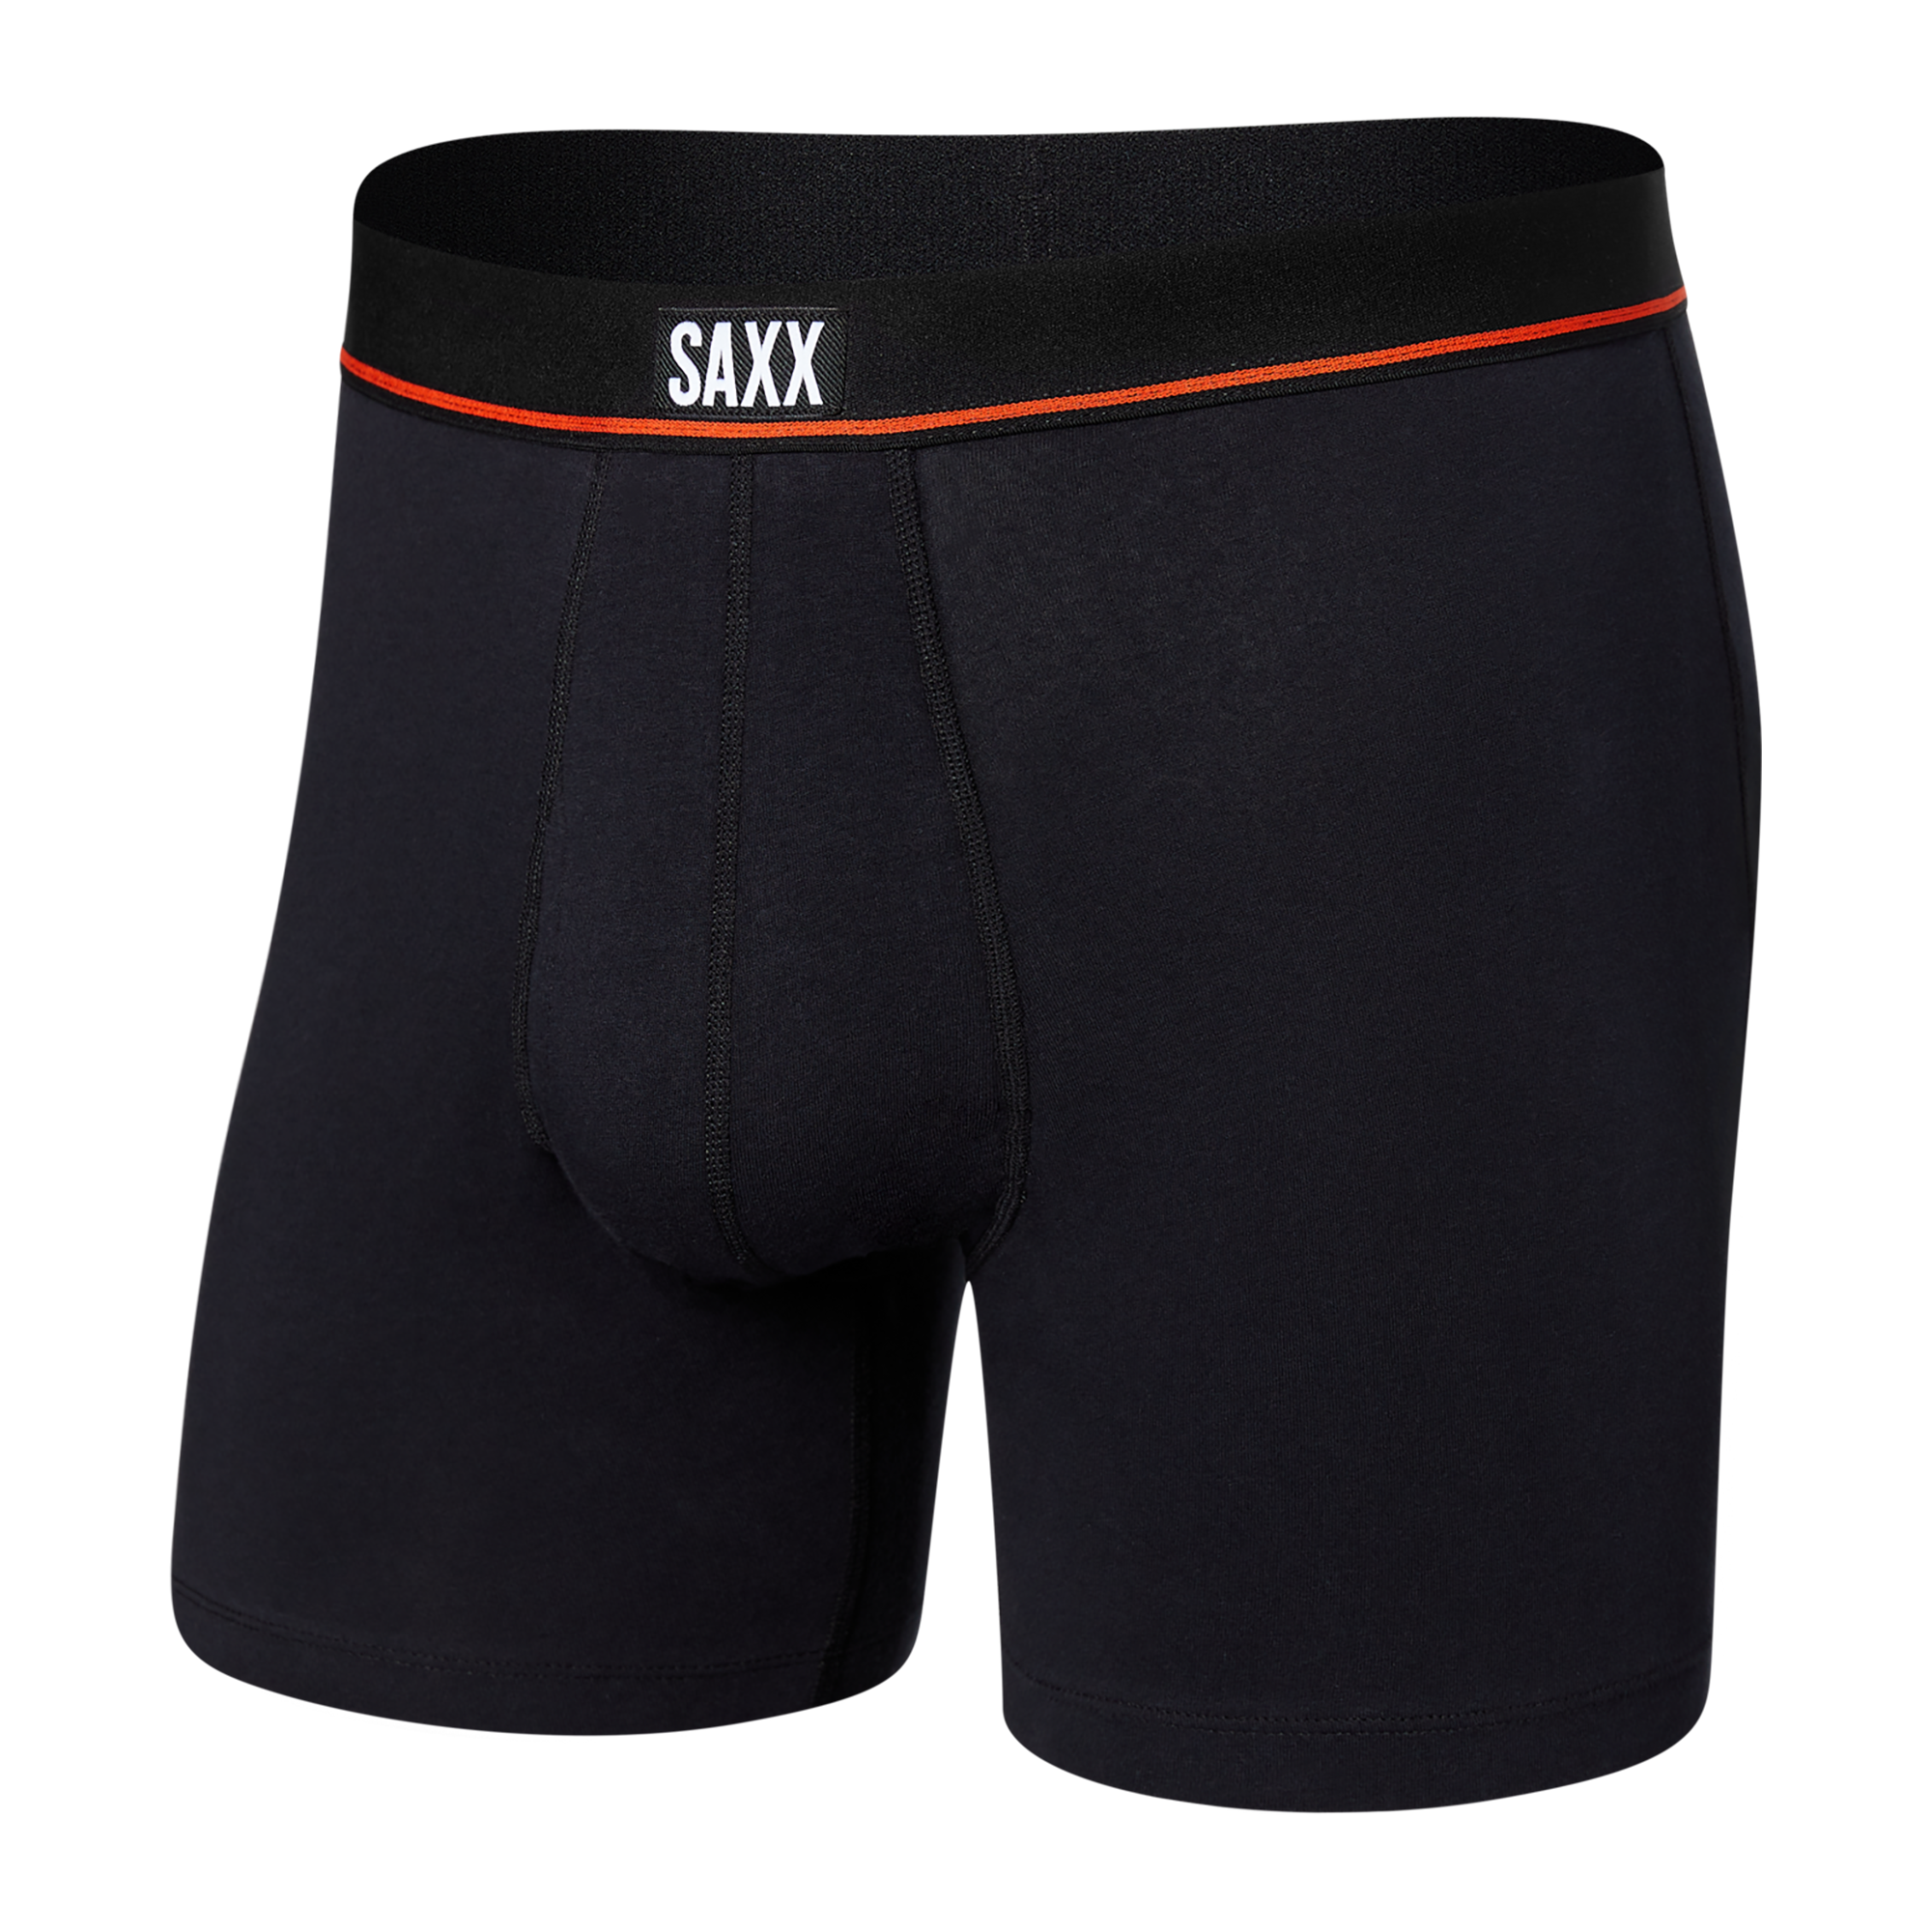 SAXX Men's Underwear - KINETIC Light-Compression Mesh Boxer Briefs with  Built-in Pouch Support - Underwear for Men